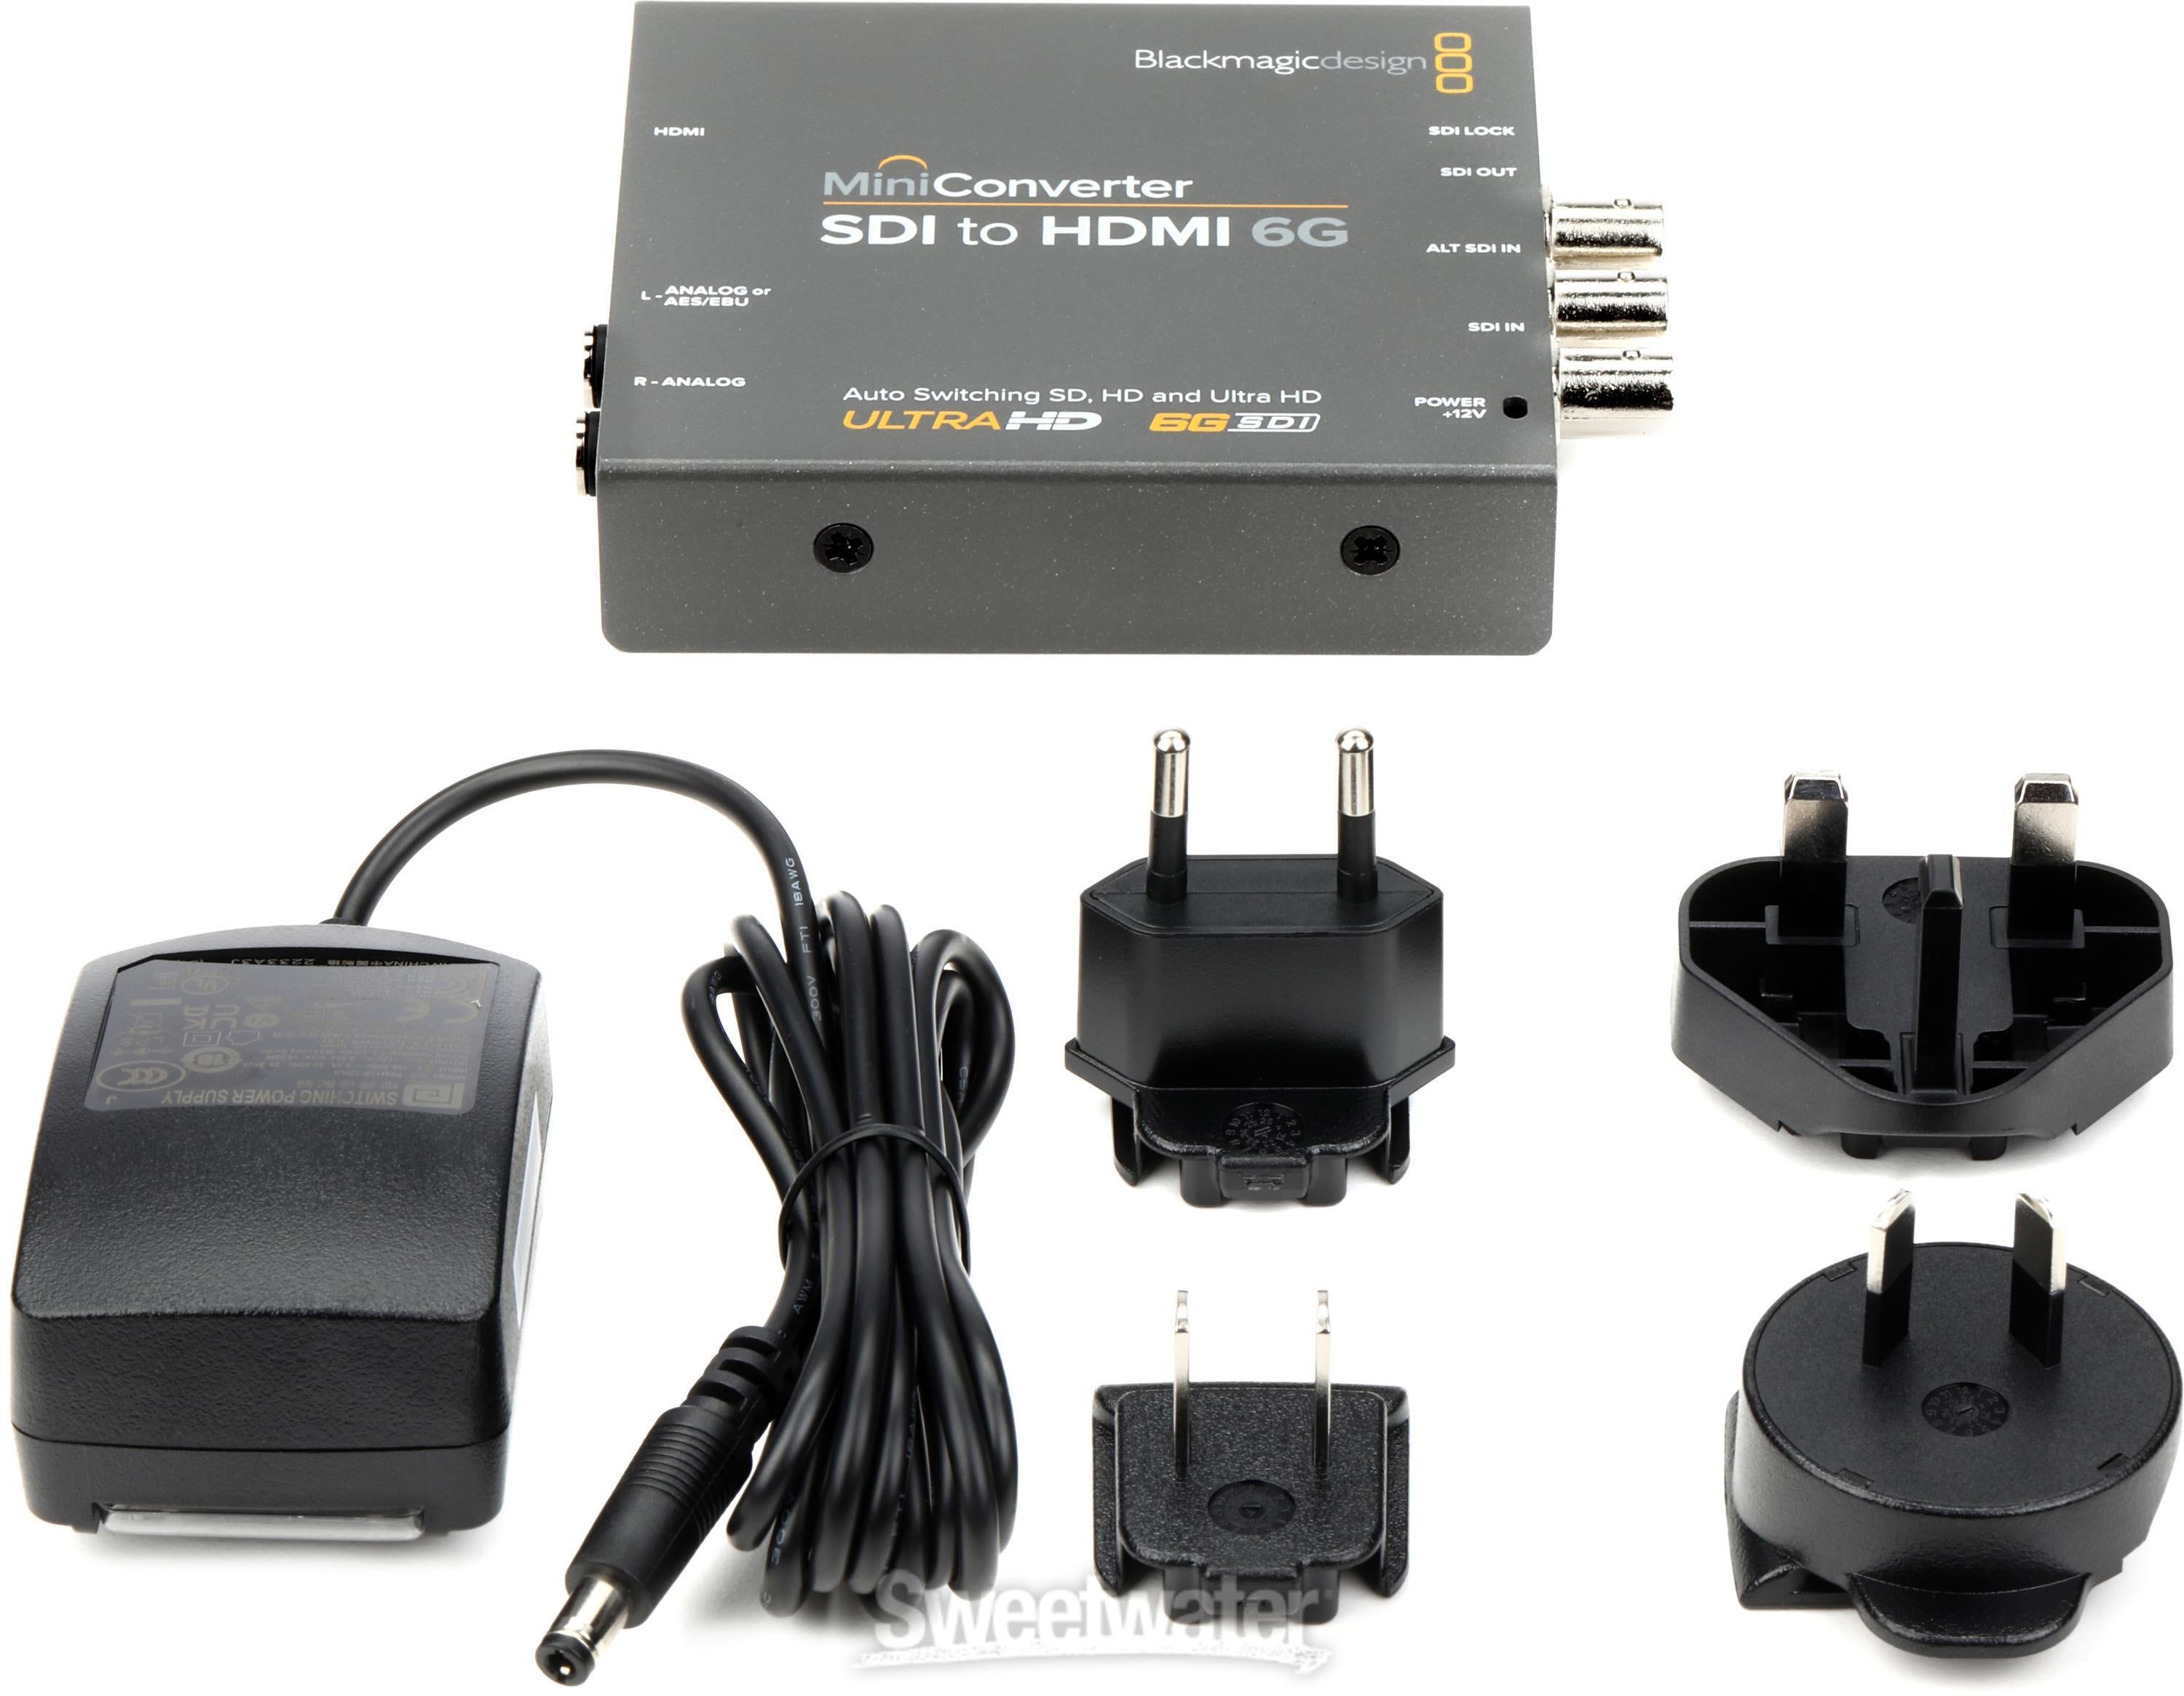 Blackmagic Design Mini Converter 6G-SDI To HDMI | Sweetwater